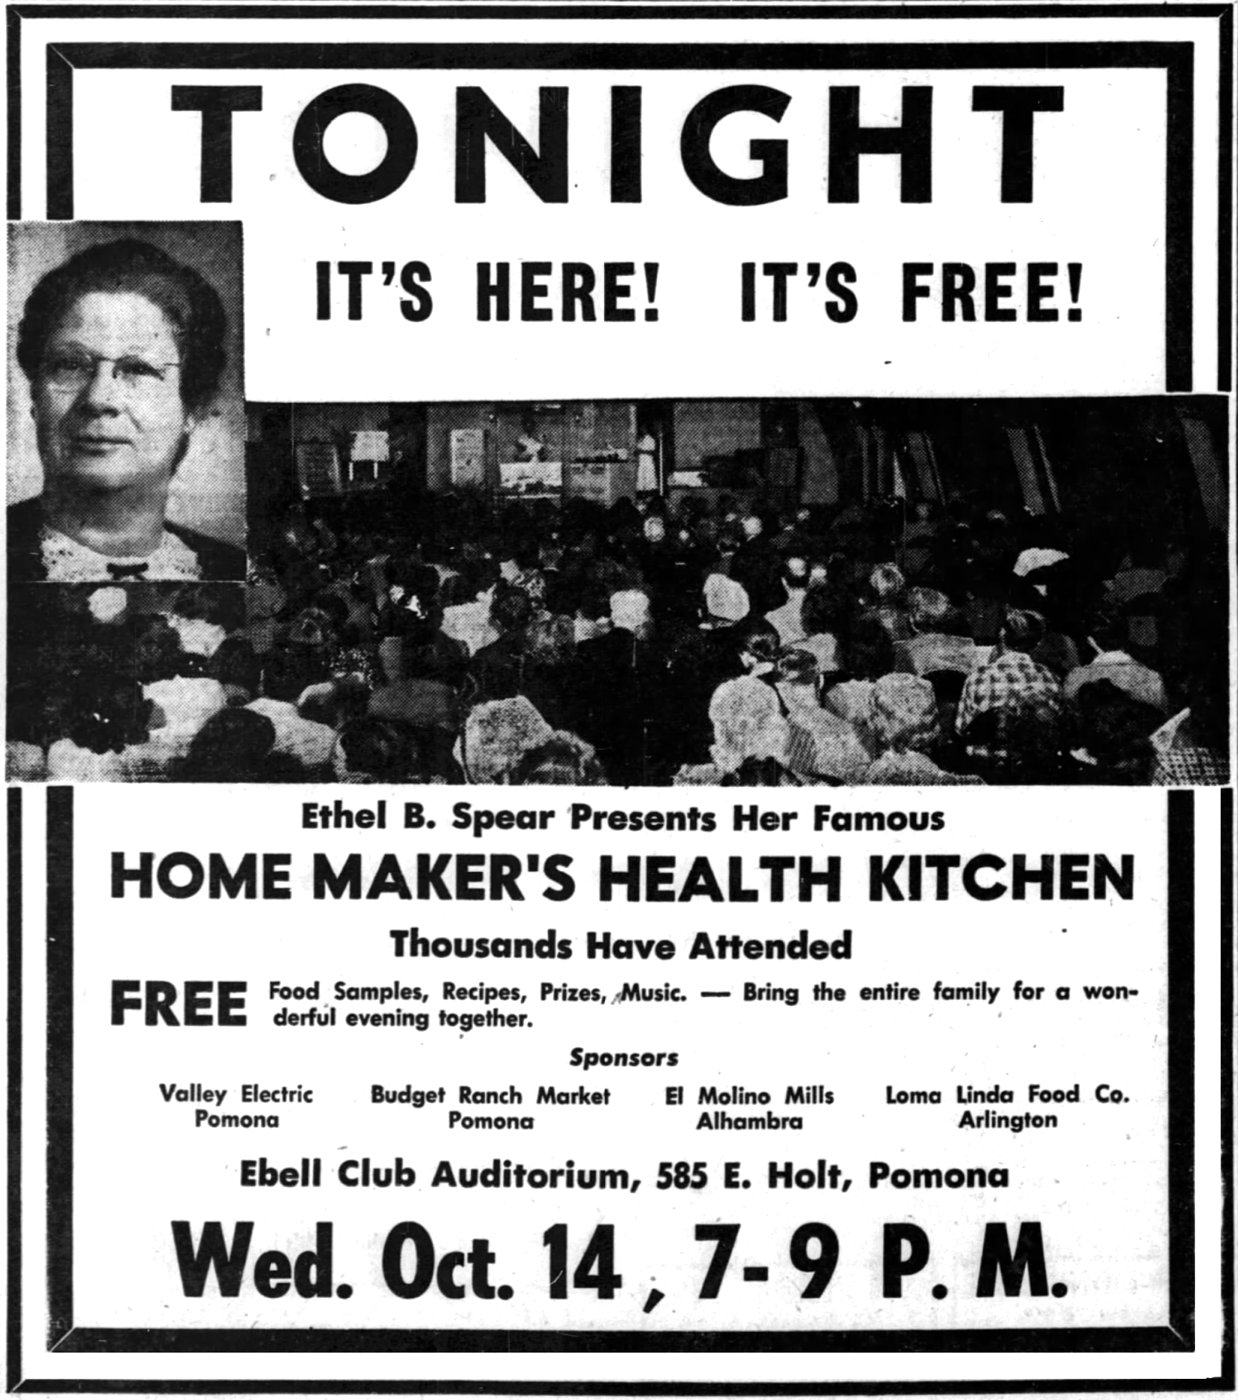 Ethel B. Spear Presents: Ethel B. Spear Presents Her Famous Home Maker’s Health Kitchen. Pomona Progress Bulletin, October 14, 1953.; El Molino Mills; Ethel B. Spear